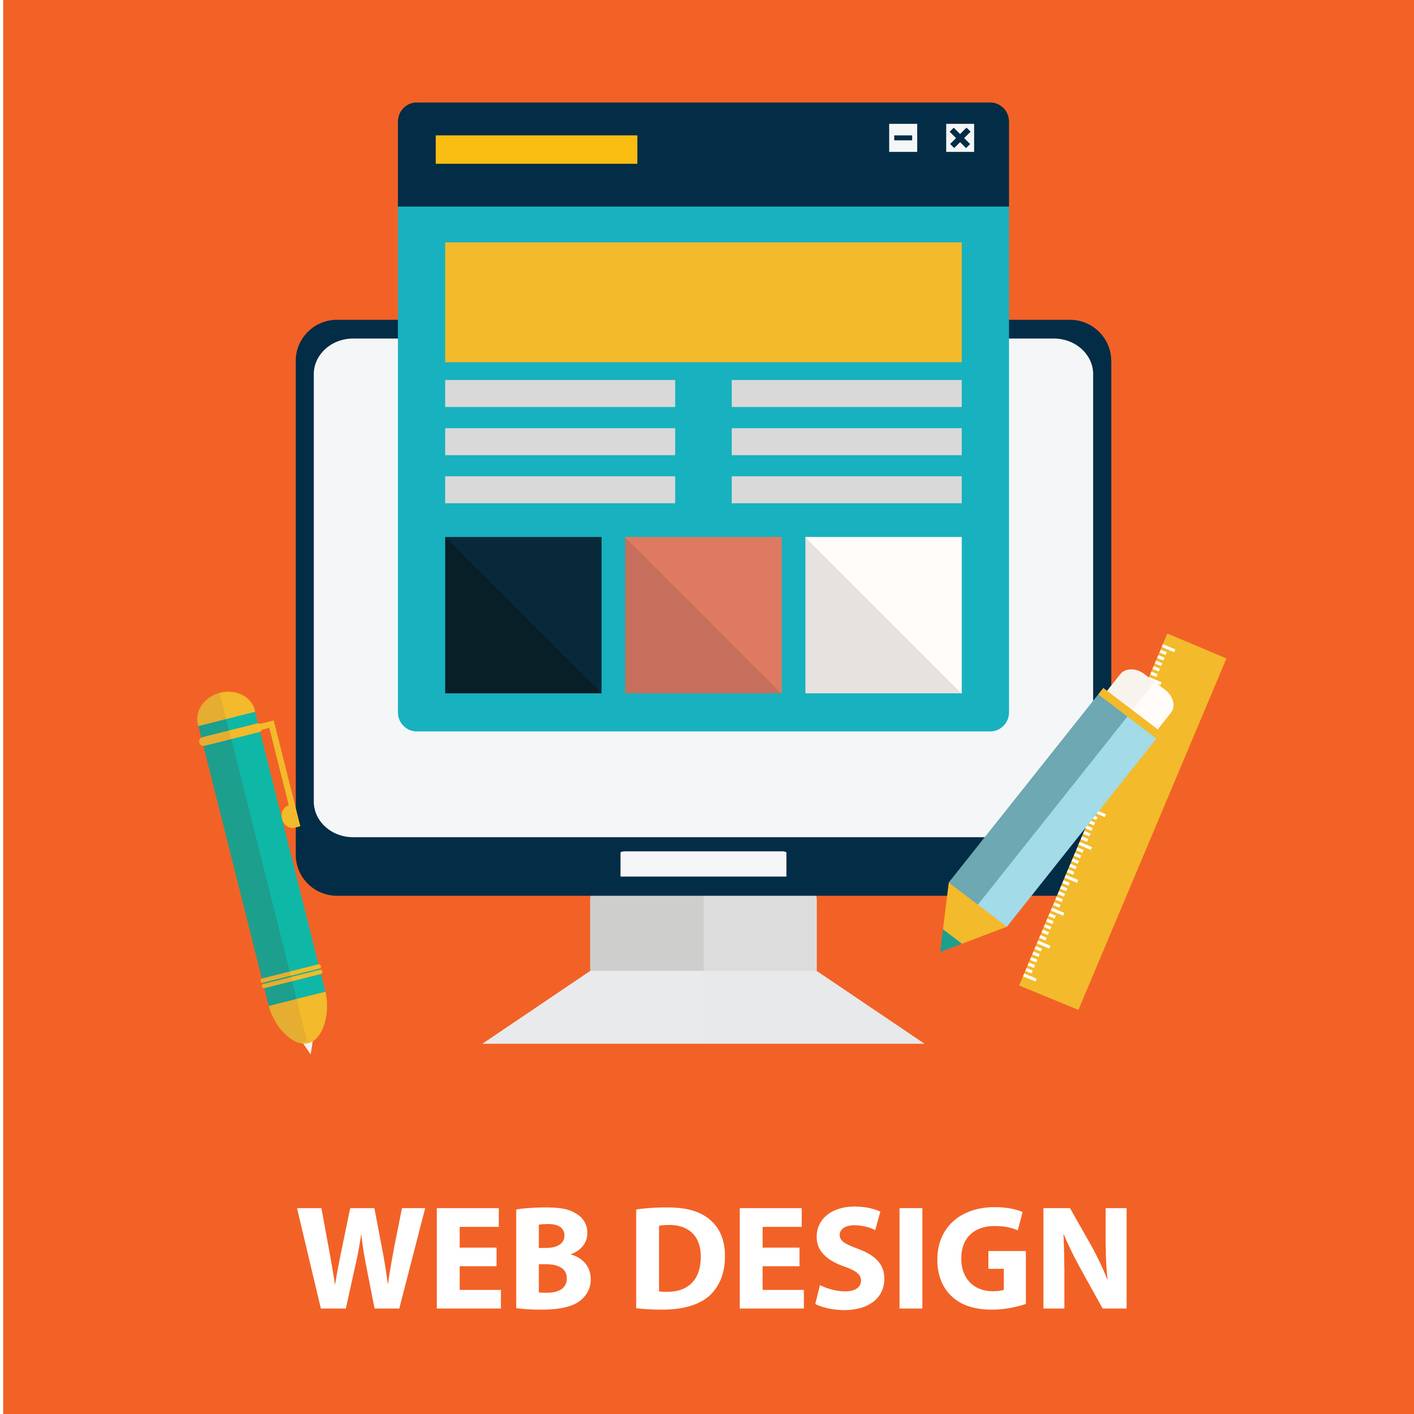 Web Design McKinney TX: Get The Help You Need